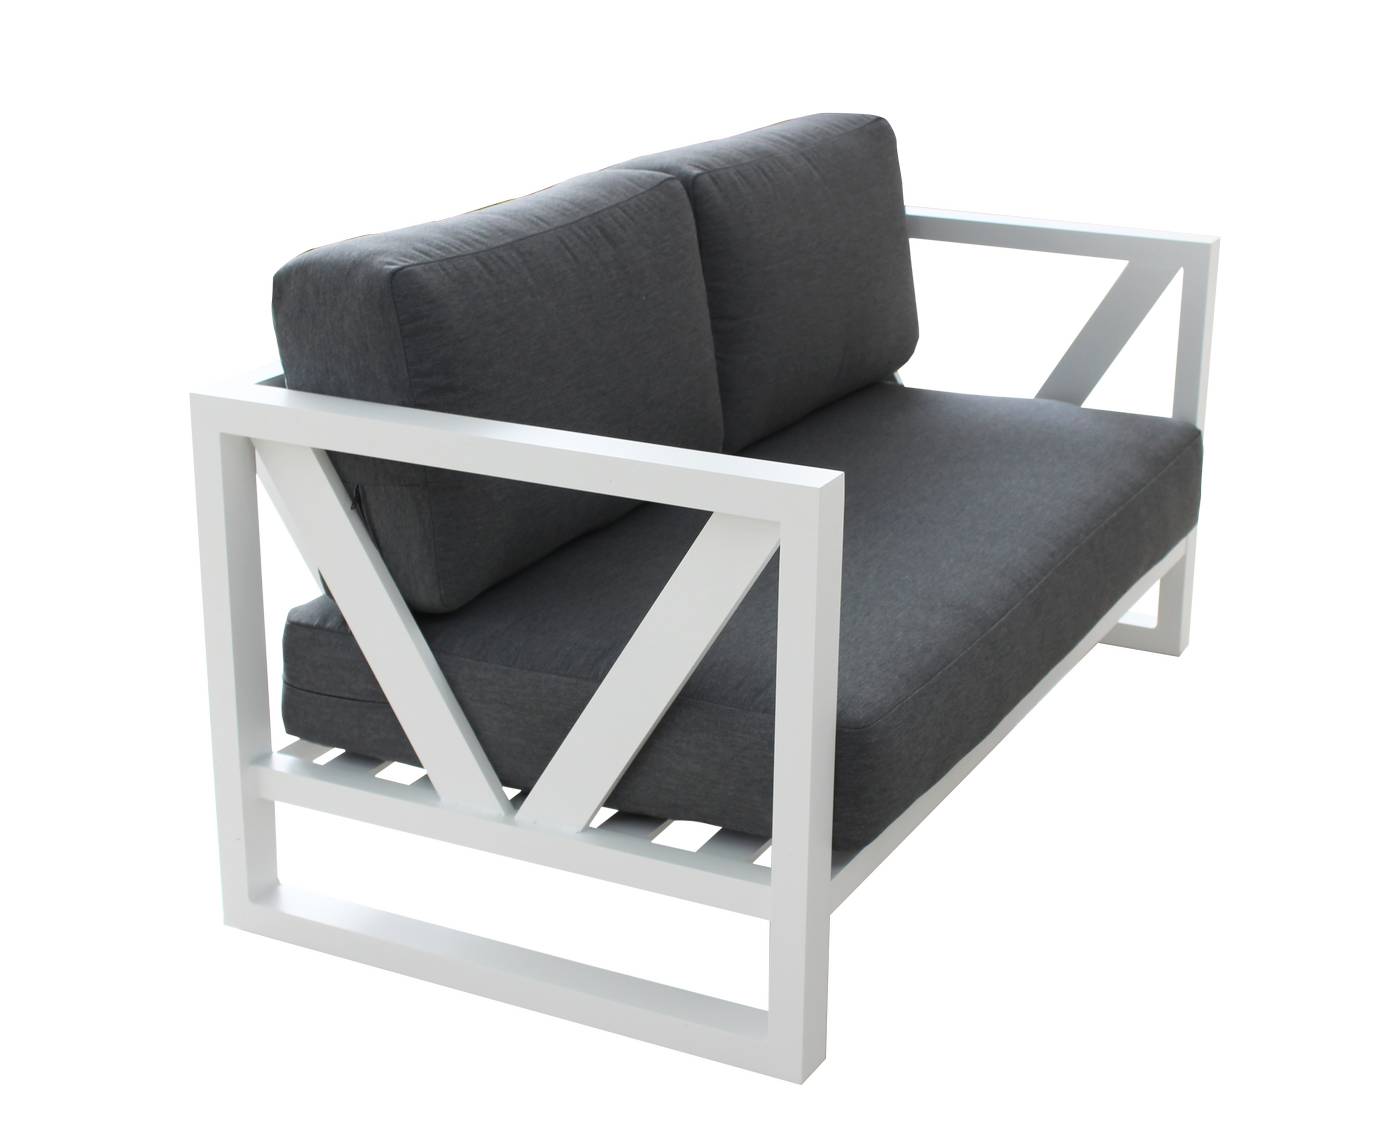 Set Aluminio Luxe Ventus-7 - Lujoso conjunto de aluminio: sofá 2 plazas + 2 sillones + mesa de centro. Color conjunto: blanco, antracita, champagne, plata o marrón.